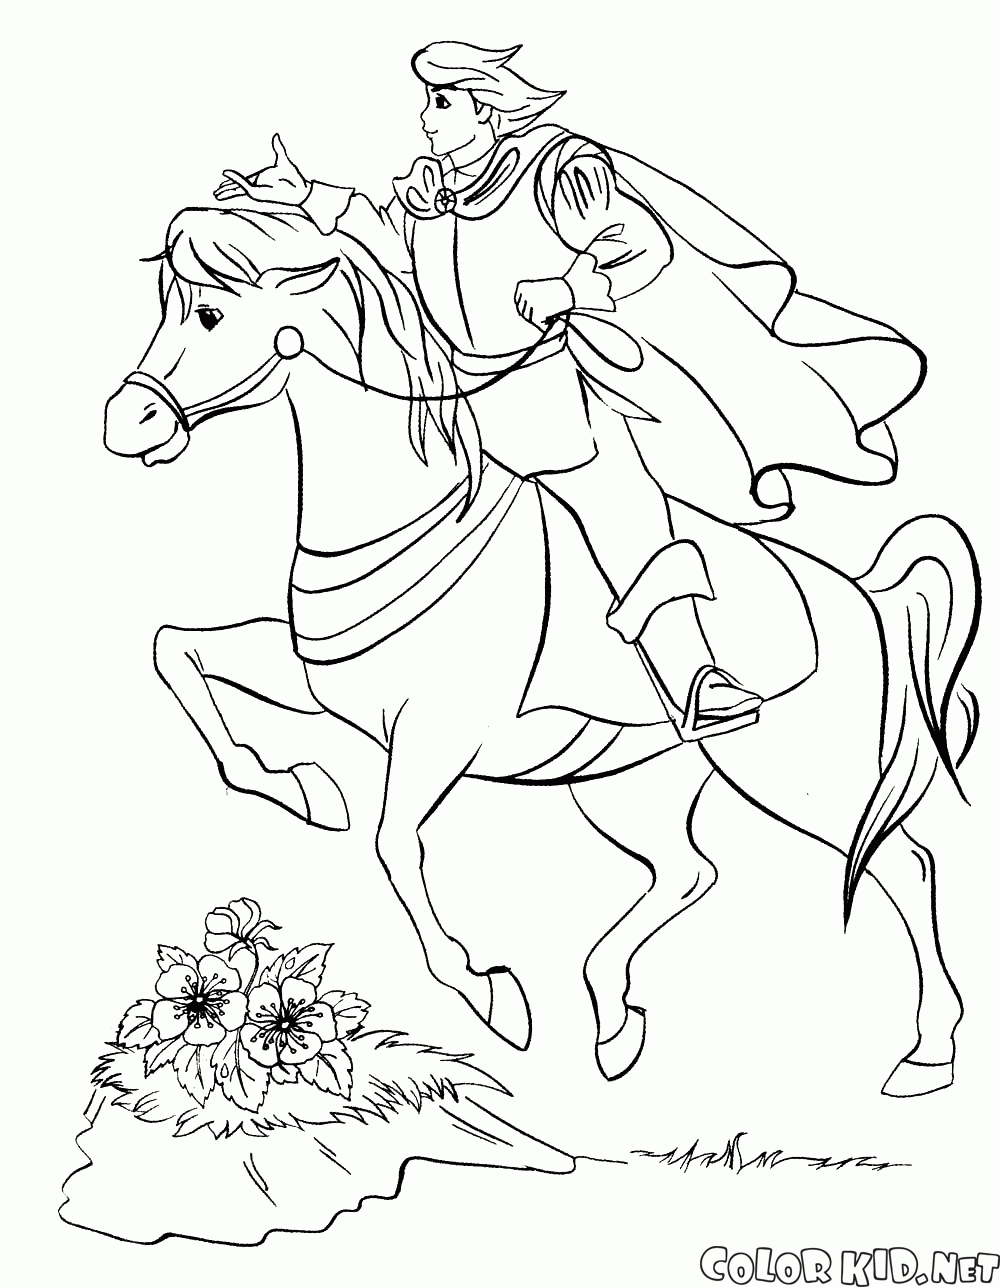 Príncipe a cavalo